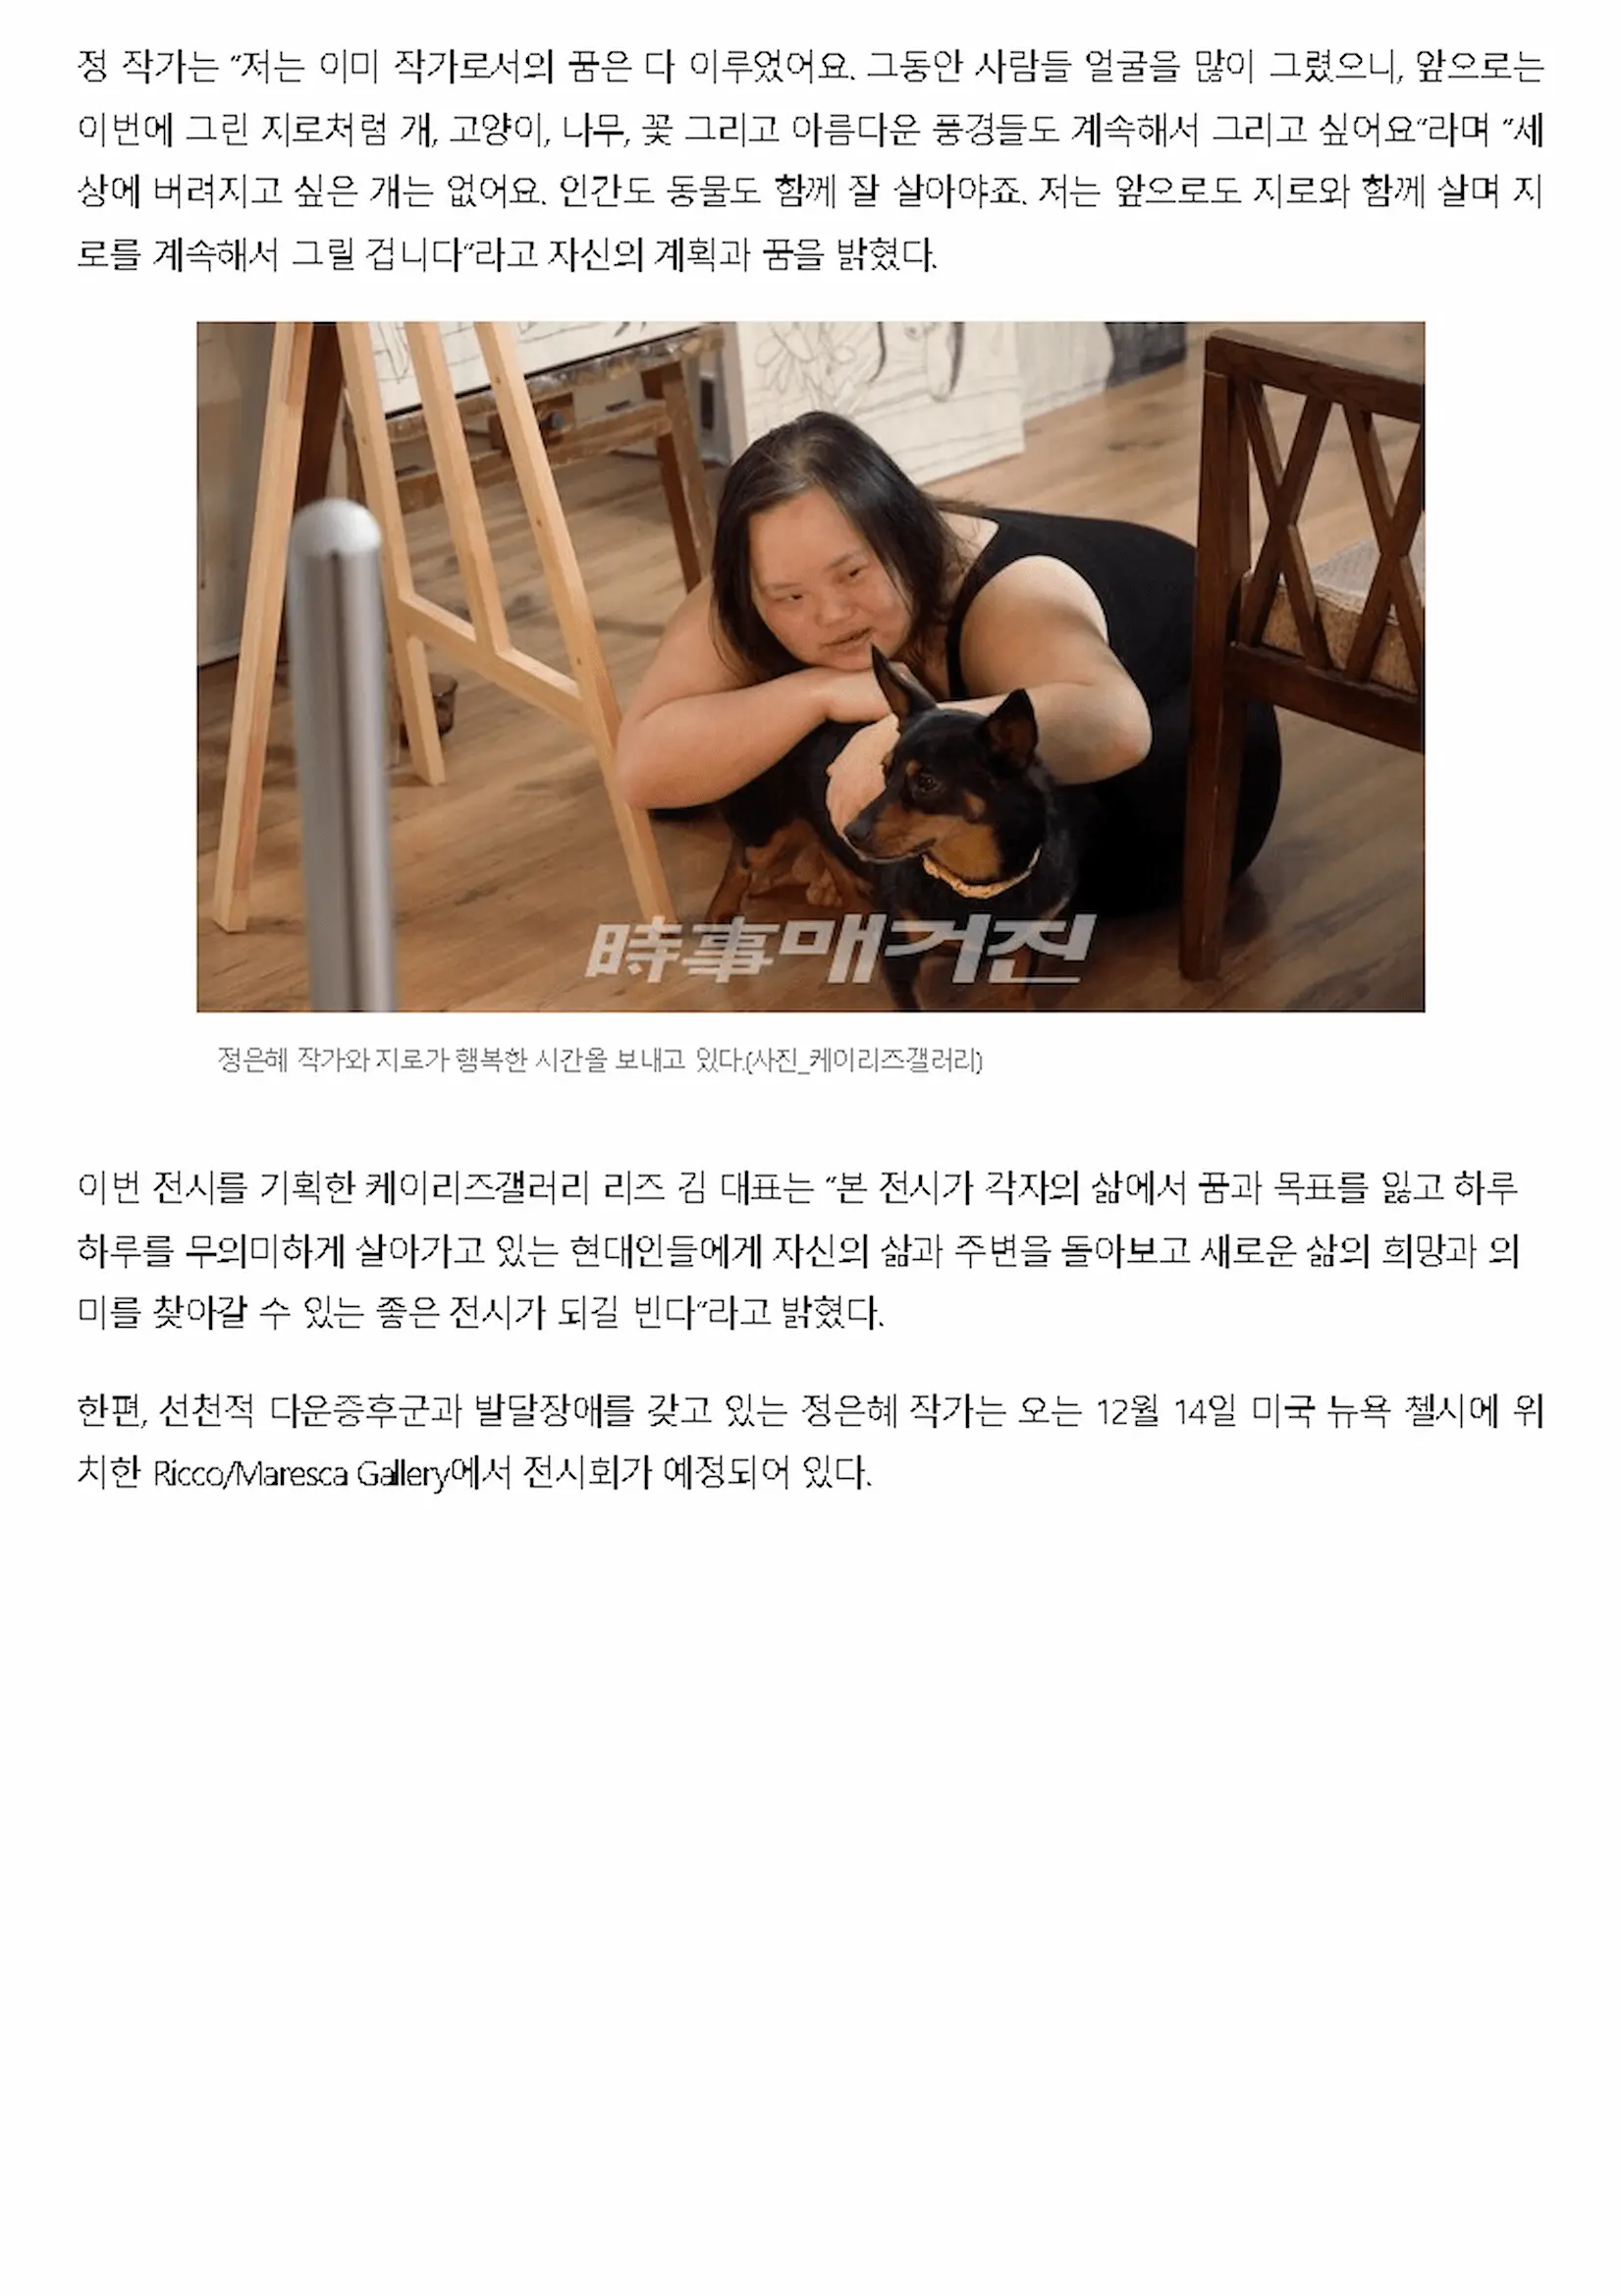 SISAMagazine_JungEunhye_NewYork_페이지_2 (1)